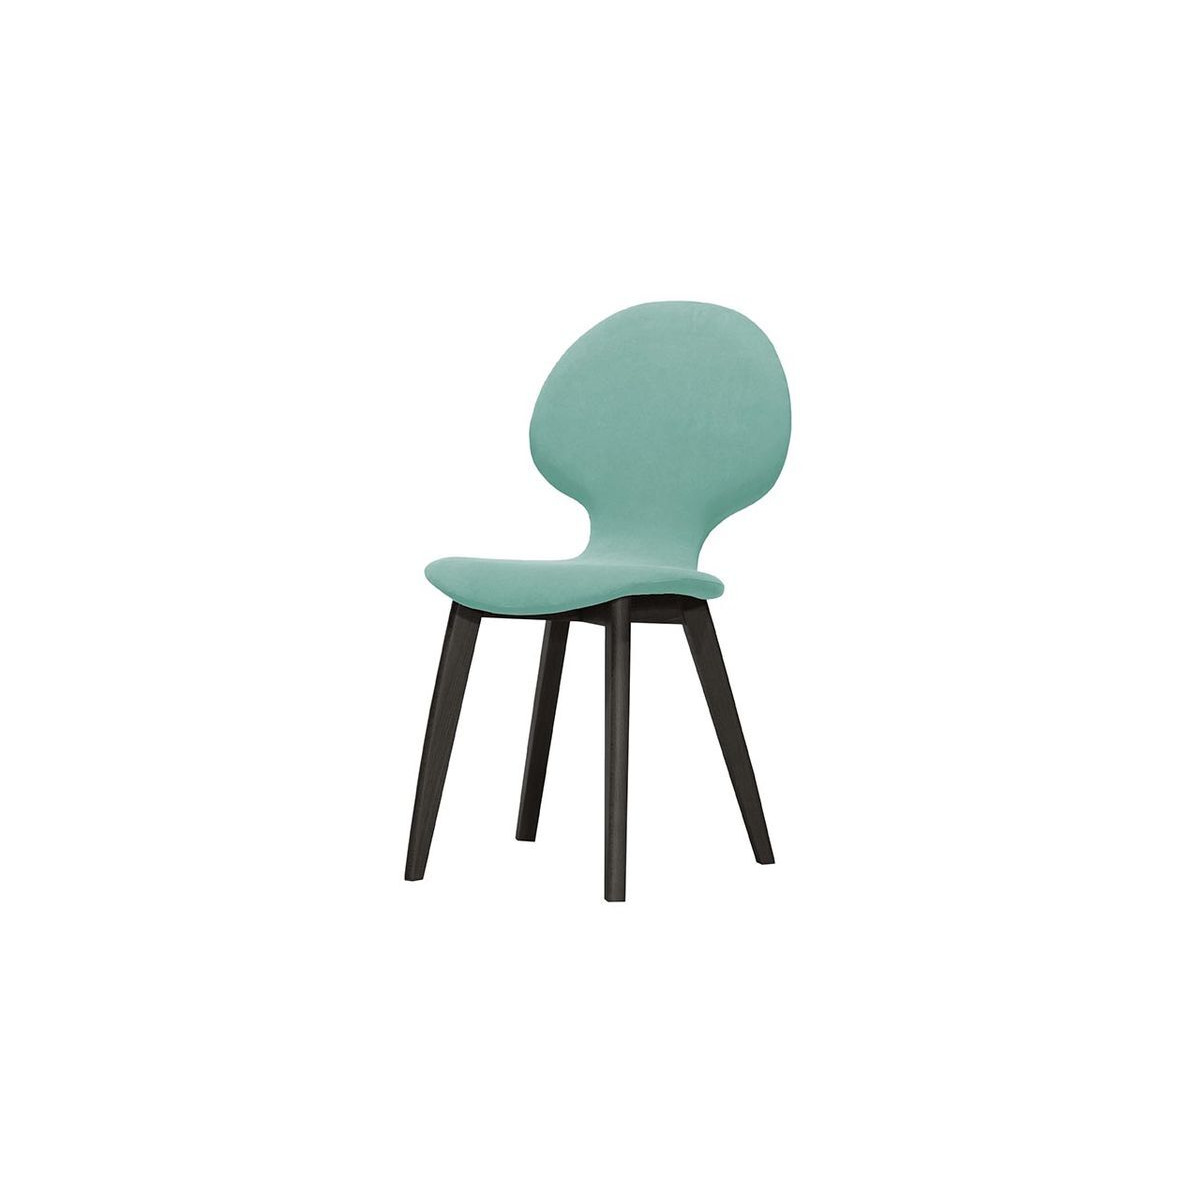 Mya Dining Chair, light blue, Leg colour: black - image 1